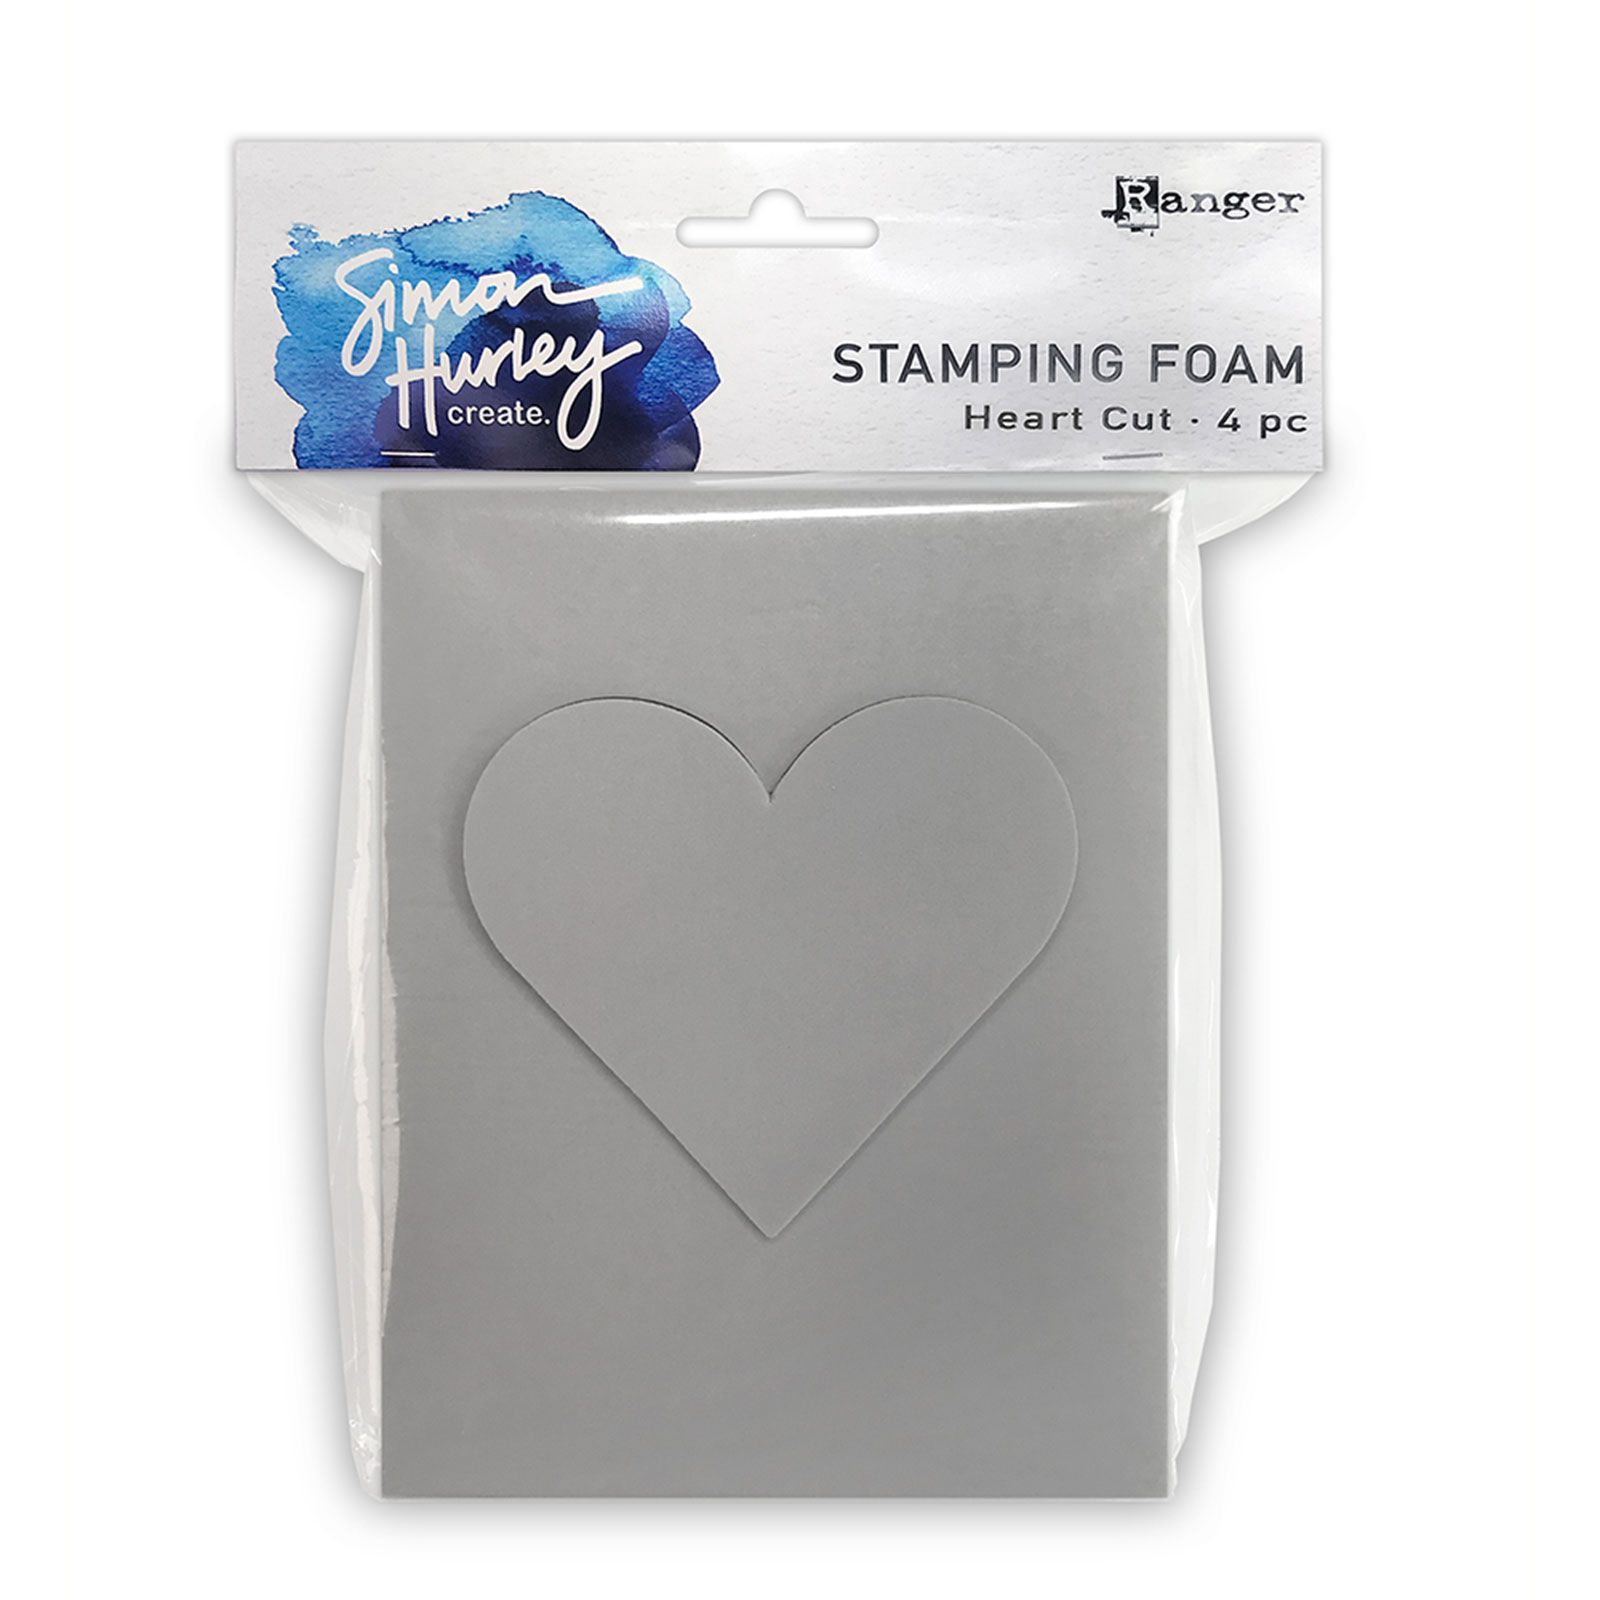 Ranger • Simon Hurley create stamping foam shapes Heart cut 4pcs